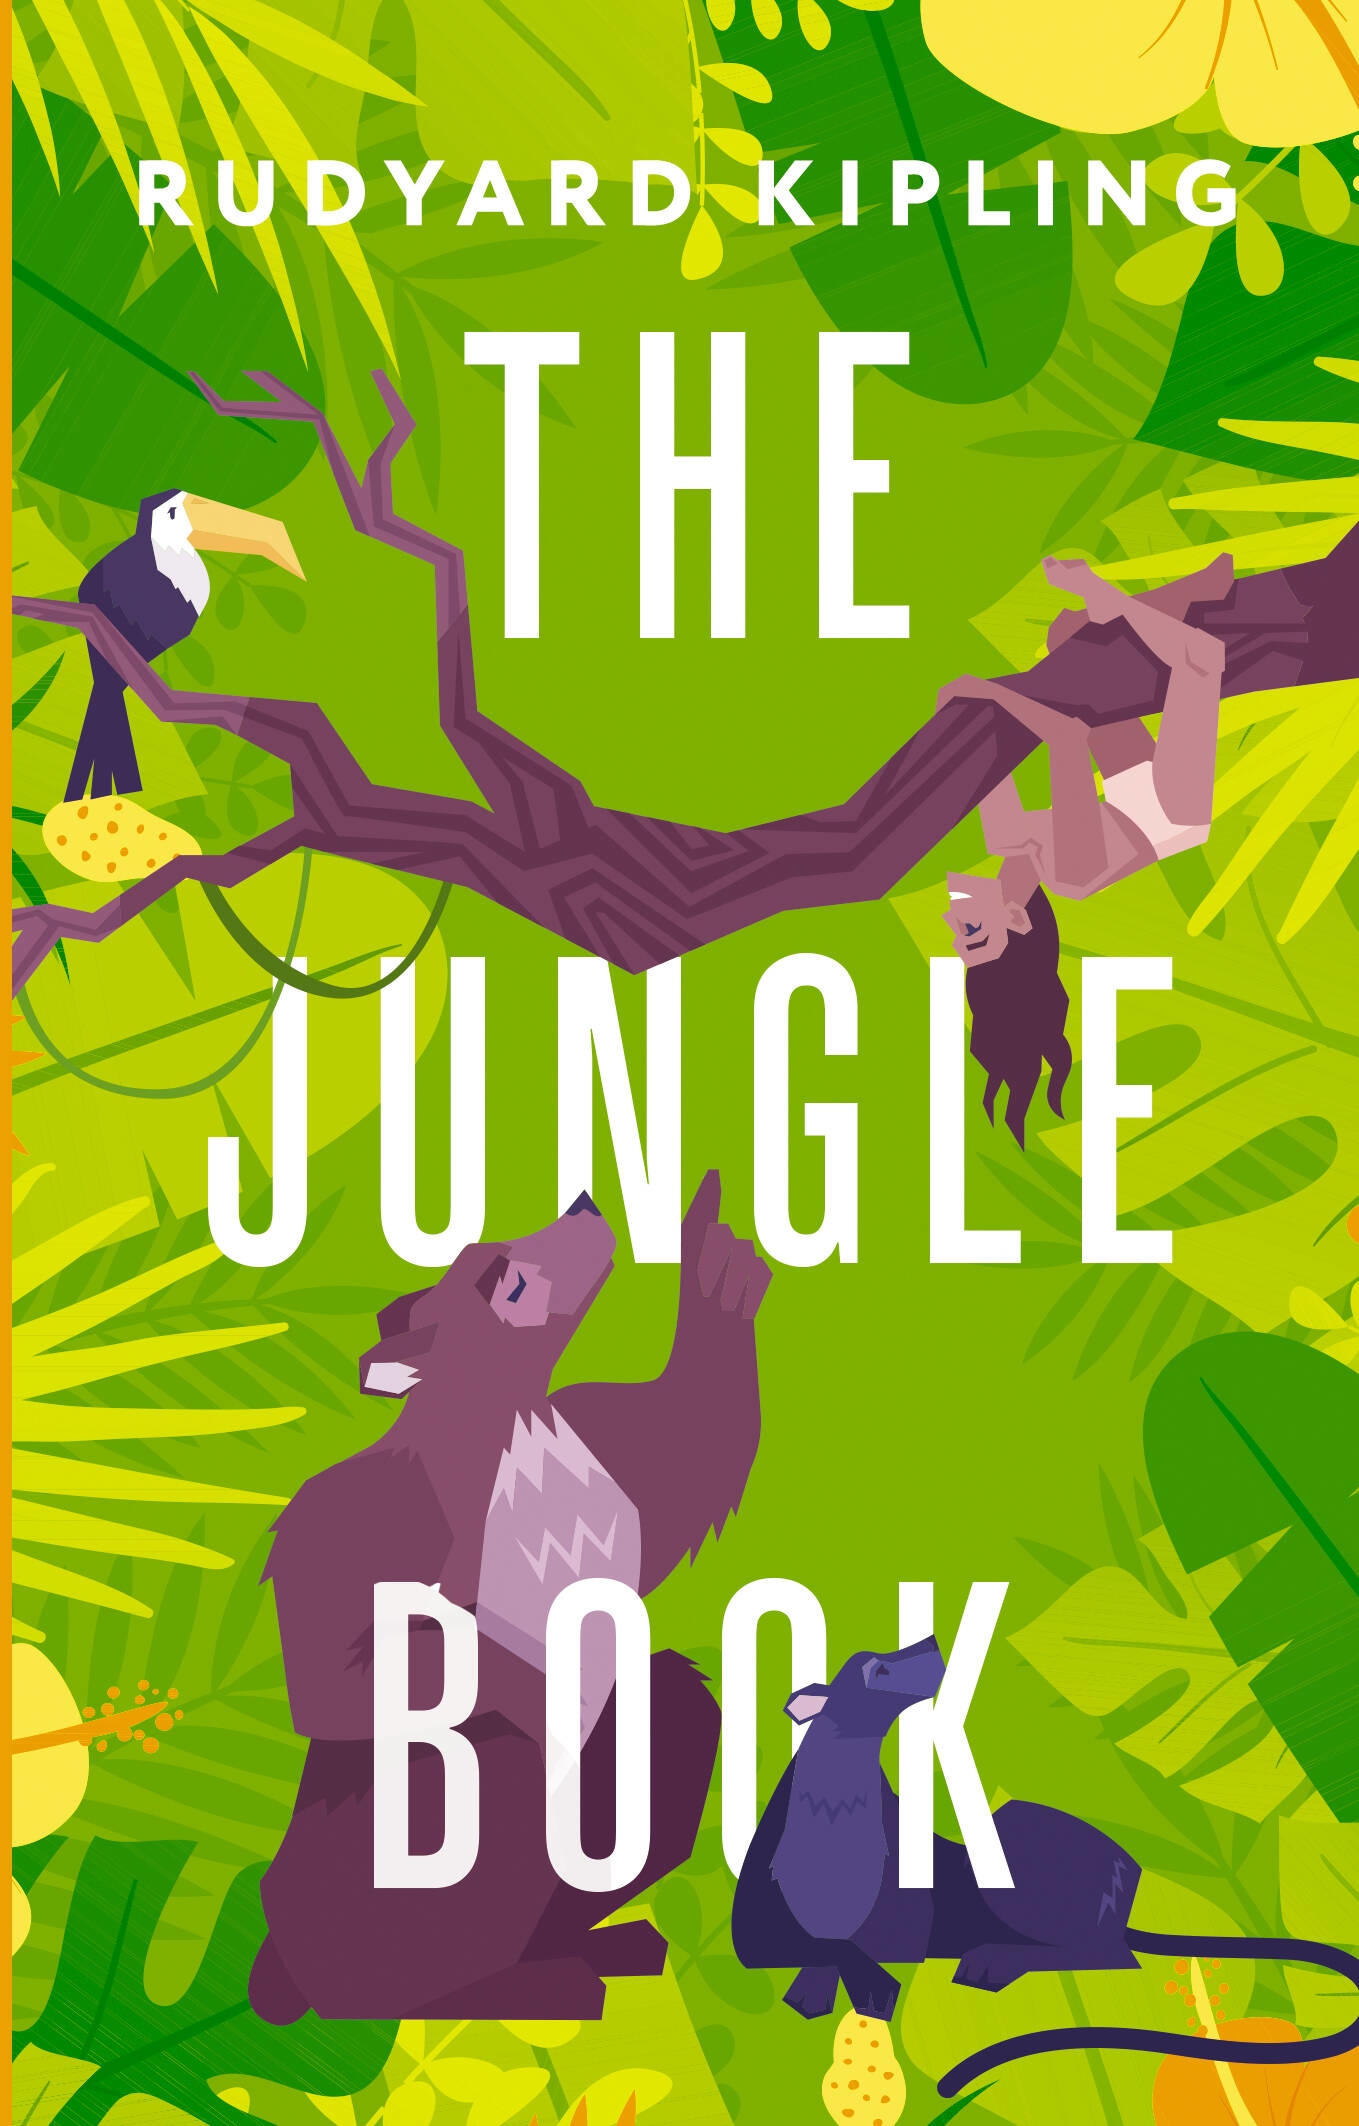 Book “The Jungle Book” by Редьярд Киплинг — 2023